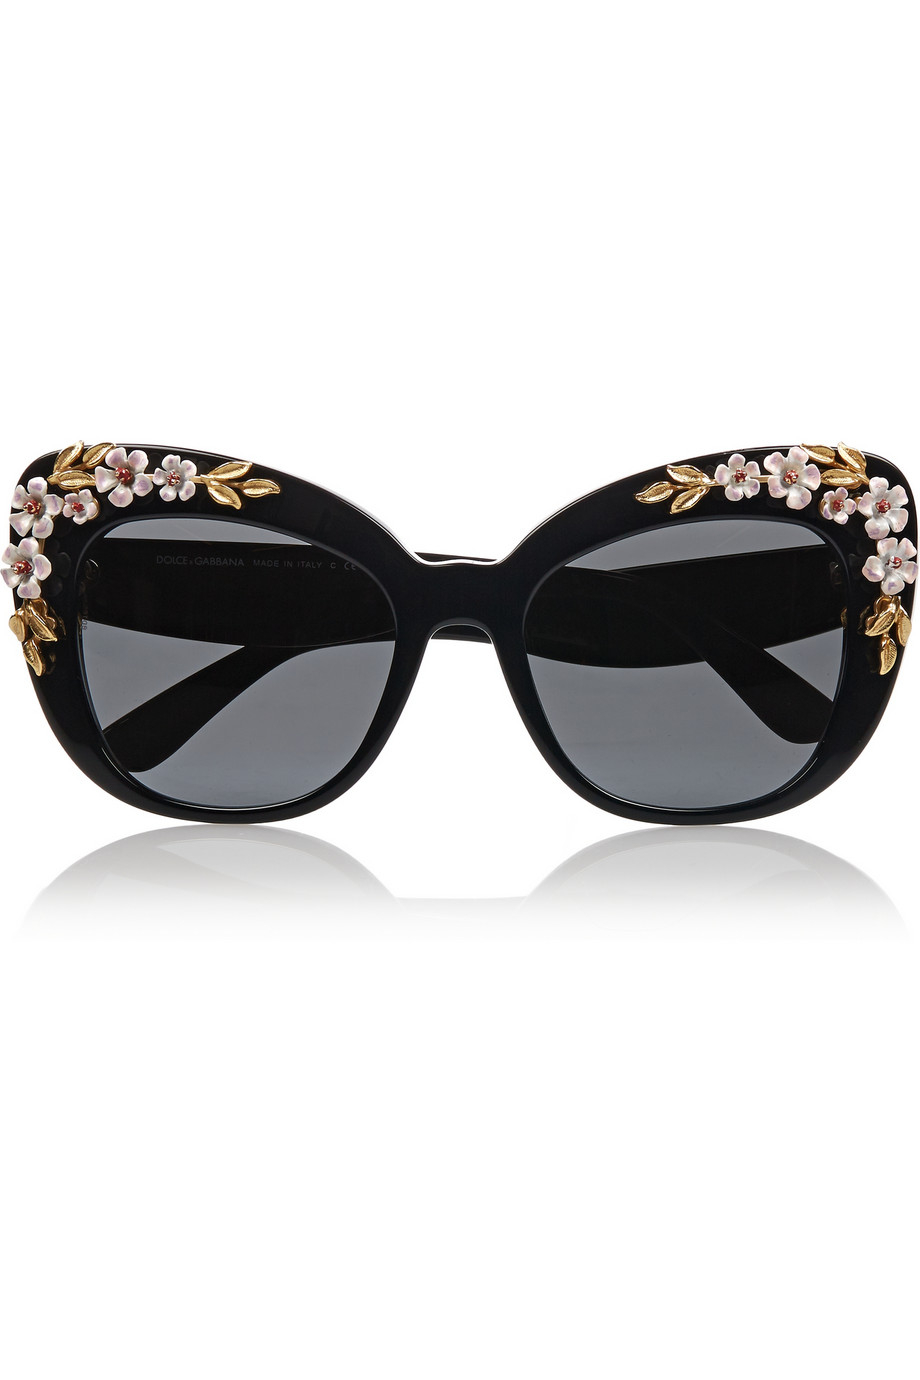 Lyst - Dolce & Gabbana Embellished Cat Eye Acetate Sunglasses in Black